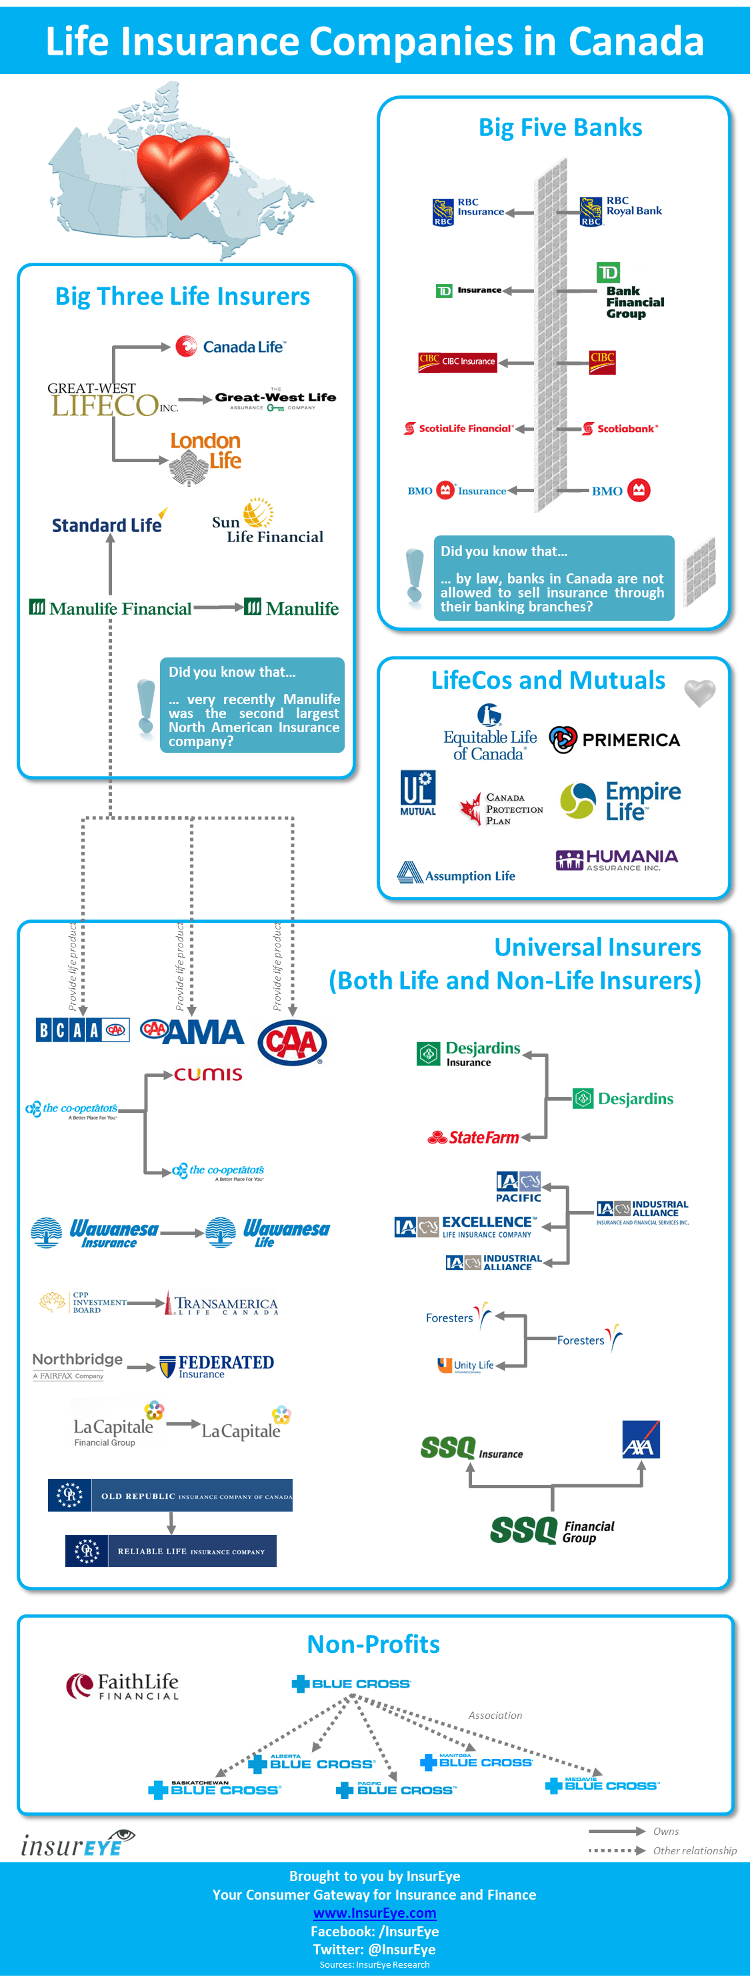 Life Insurance in Canada - Insurance Companies Landscape